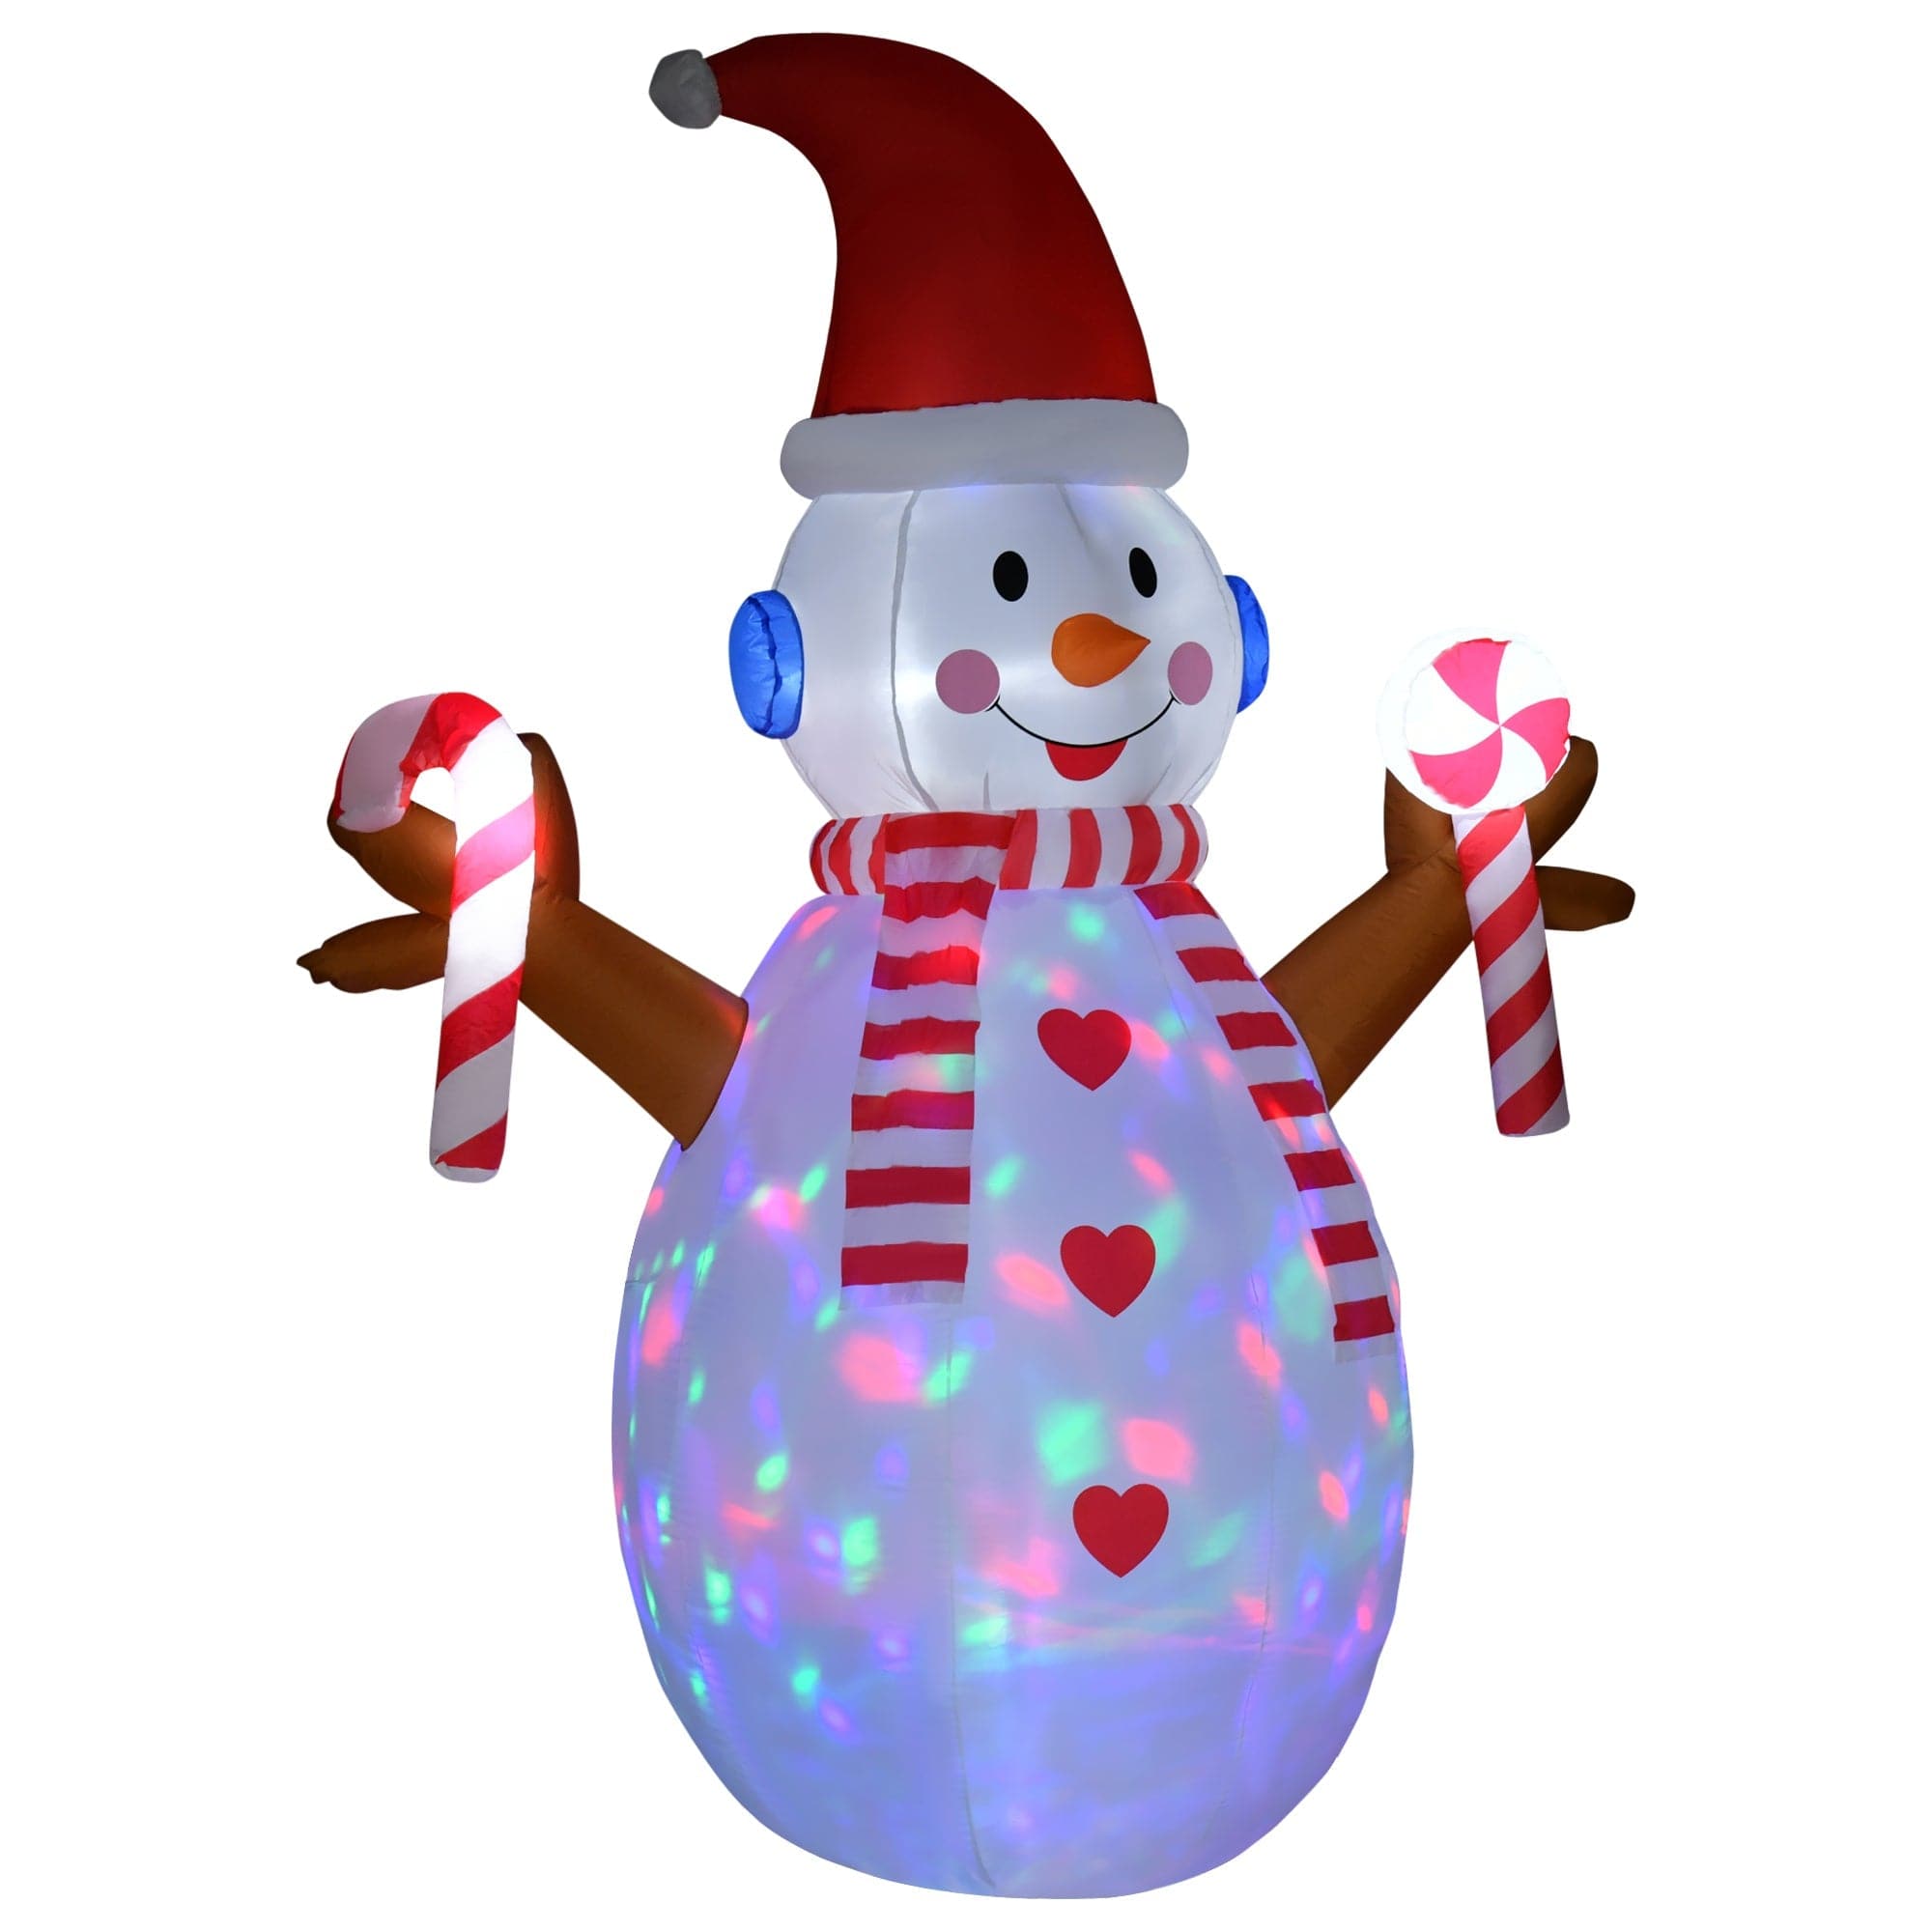 HOMCOM Christmas Rotating LED Inflatable Snowman Decoration